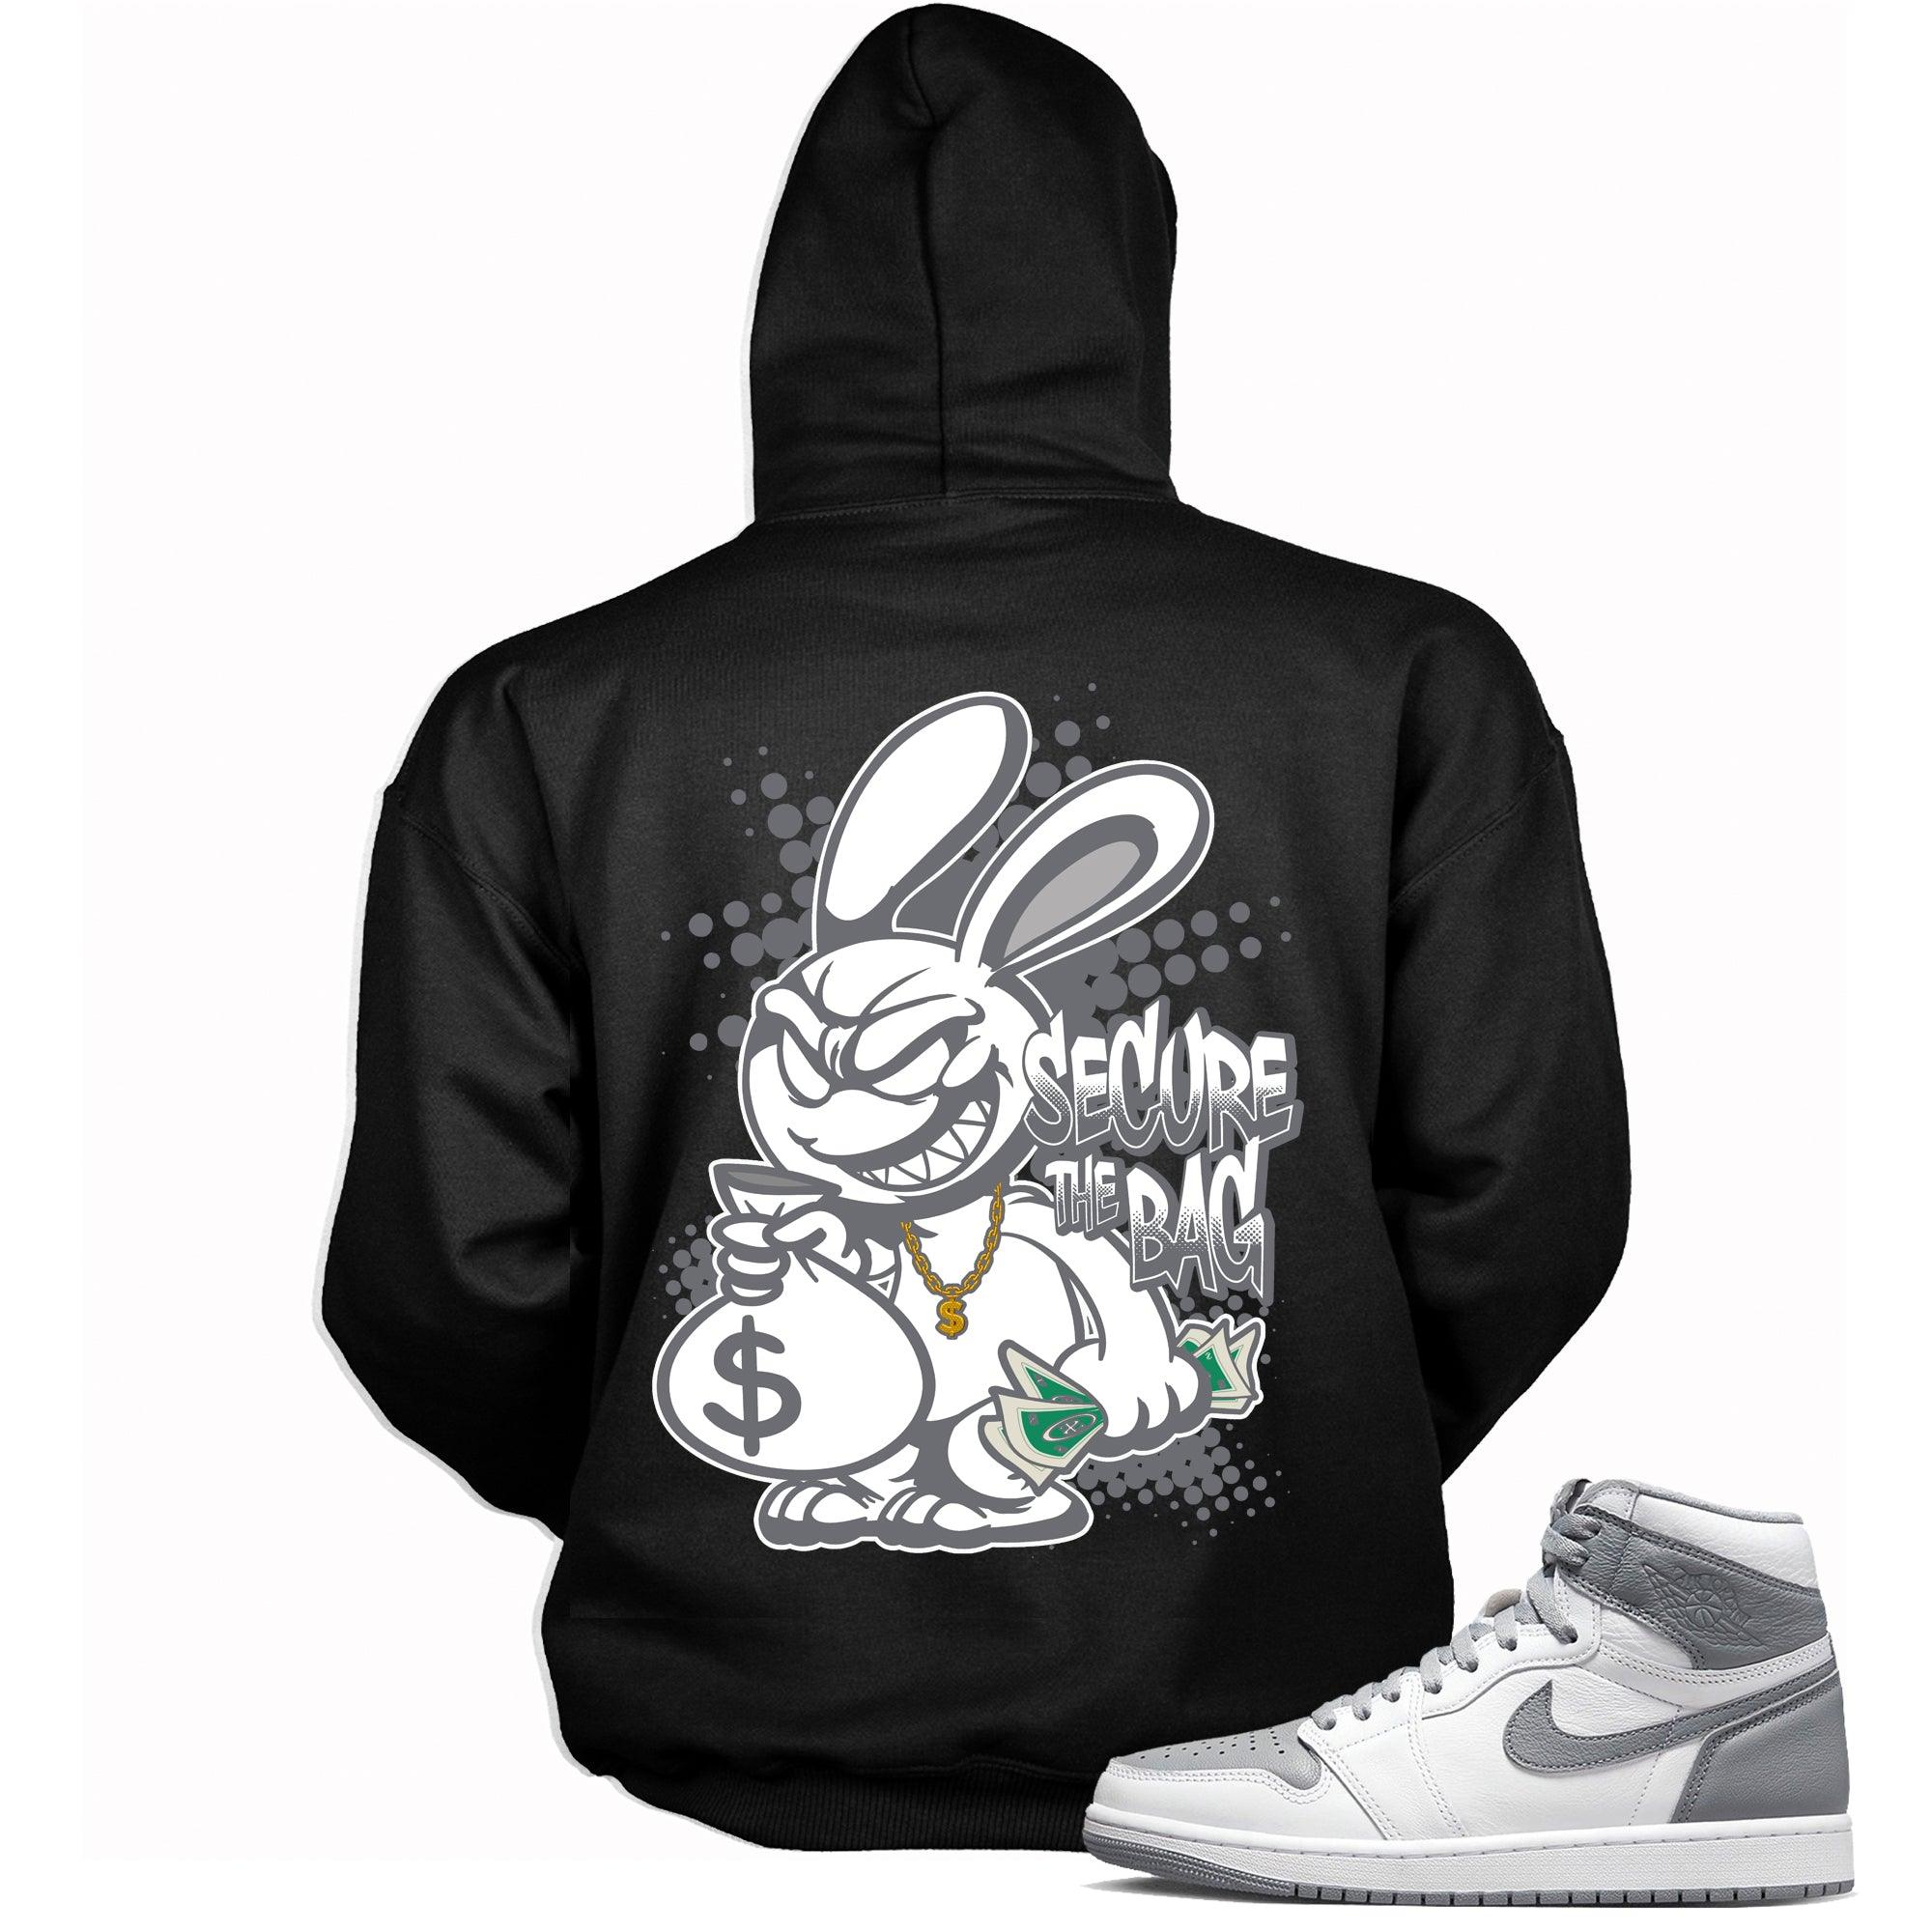 Secure the Bag Rabbit Sneaker Hoodie for Jordan 1s photo